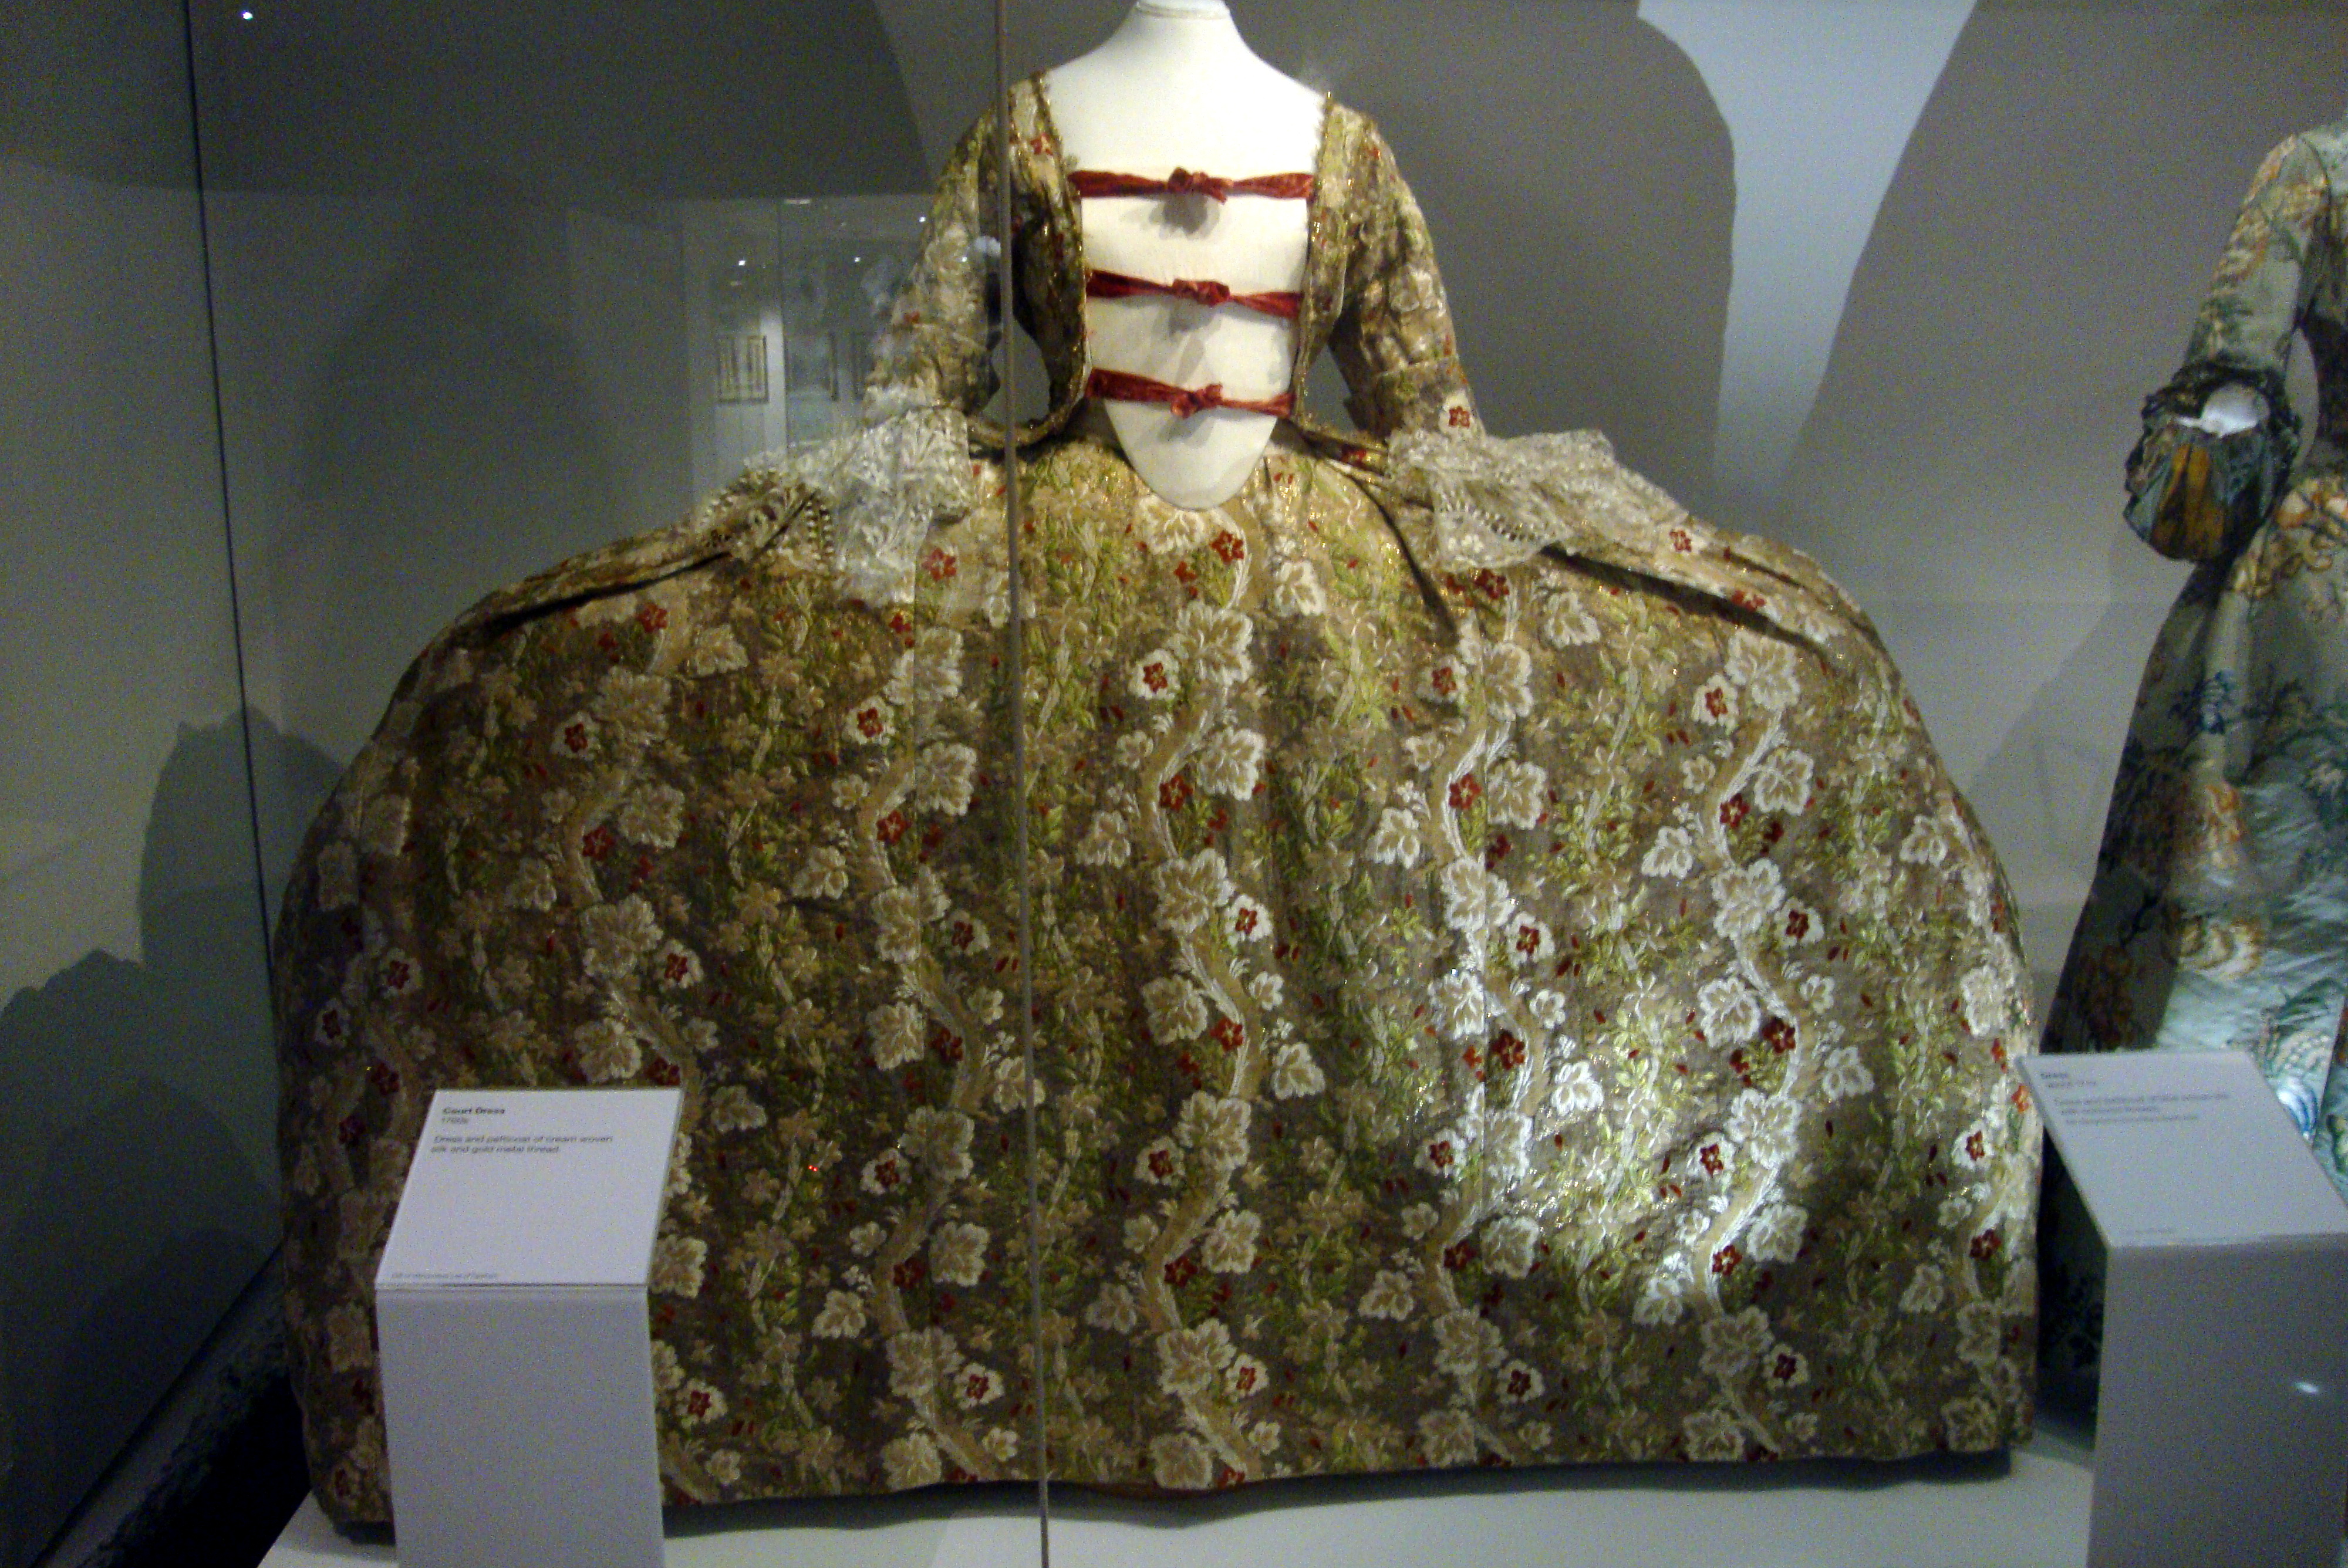 Pannier (clothing) - Wikipedia